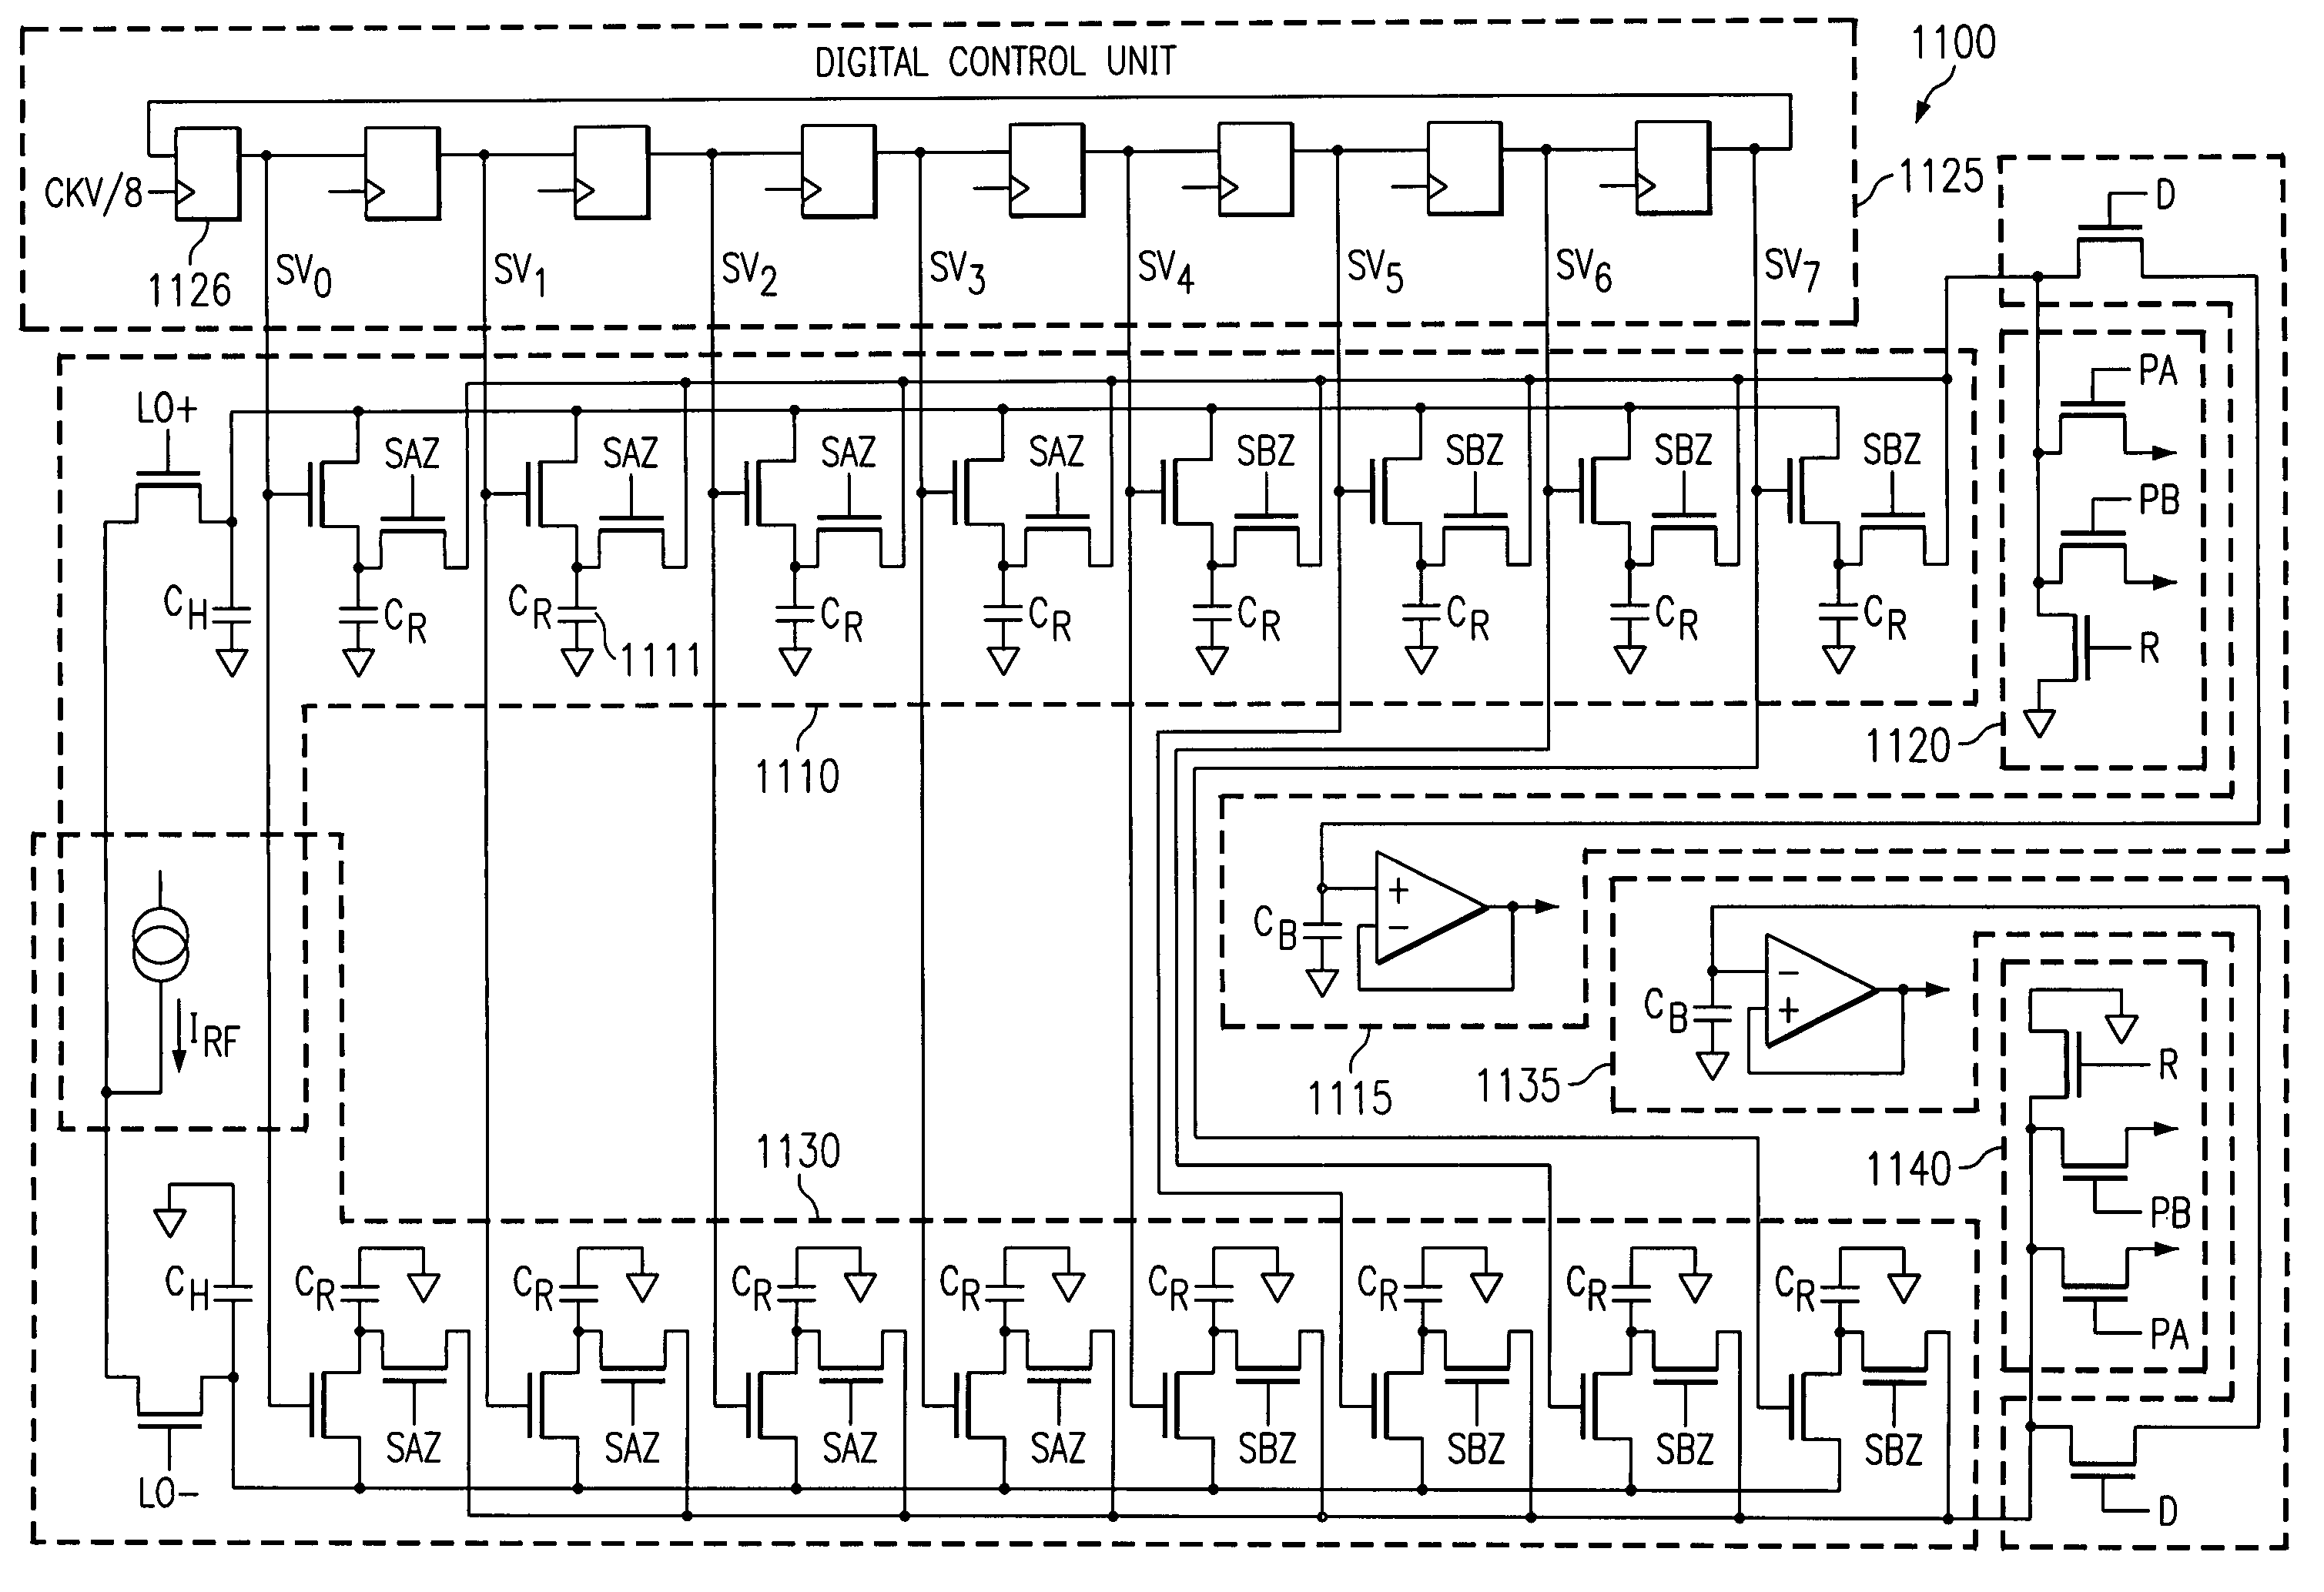 Sampling mixer with asynchronous clock and signal domains